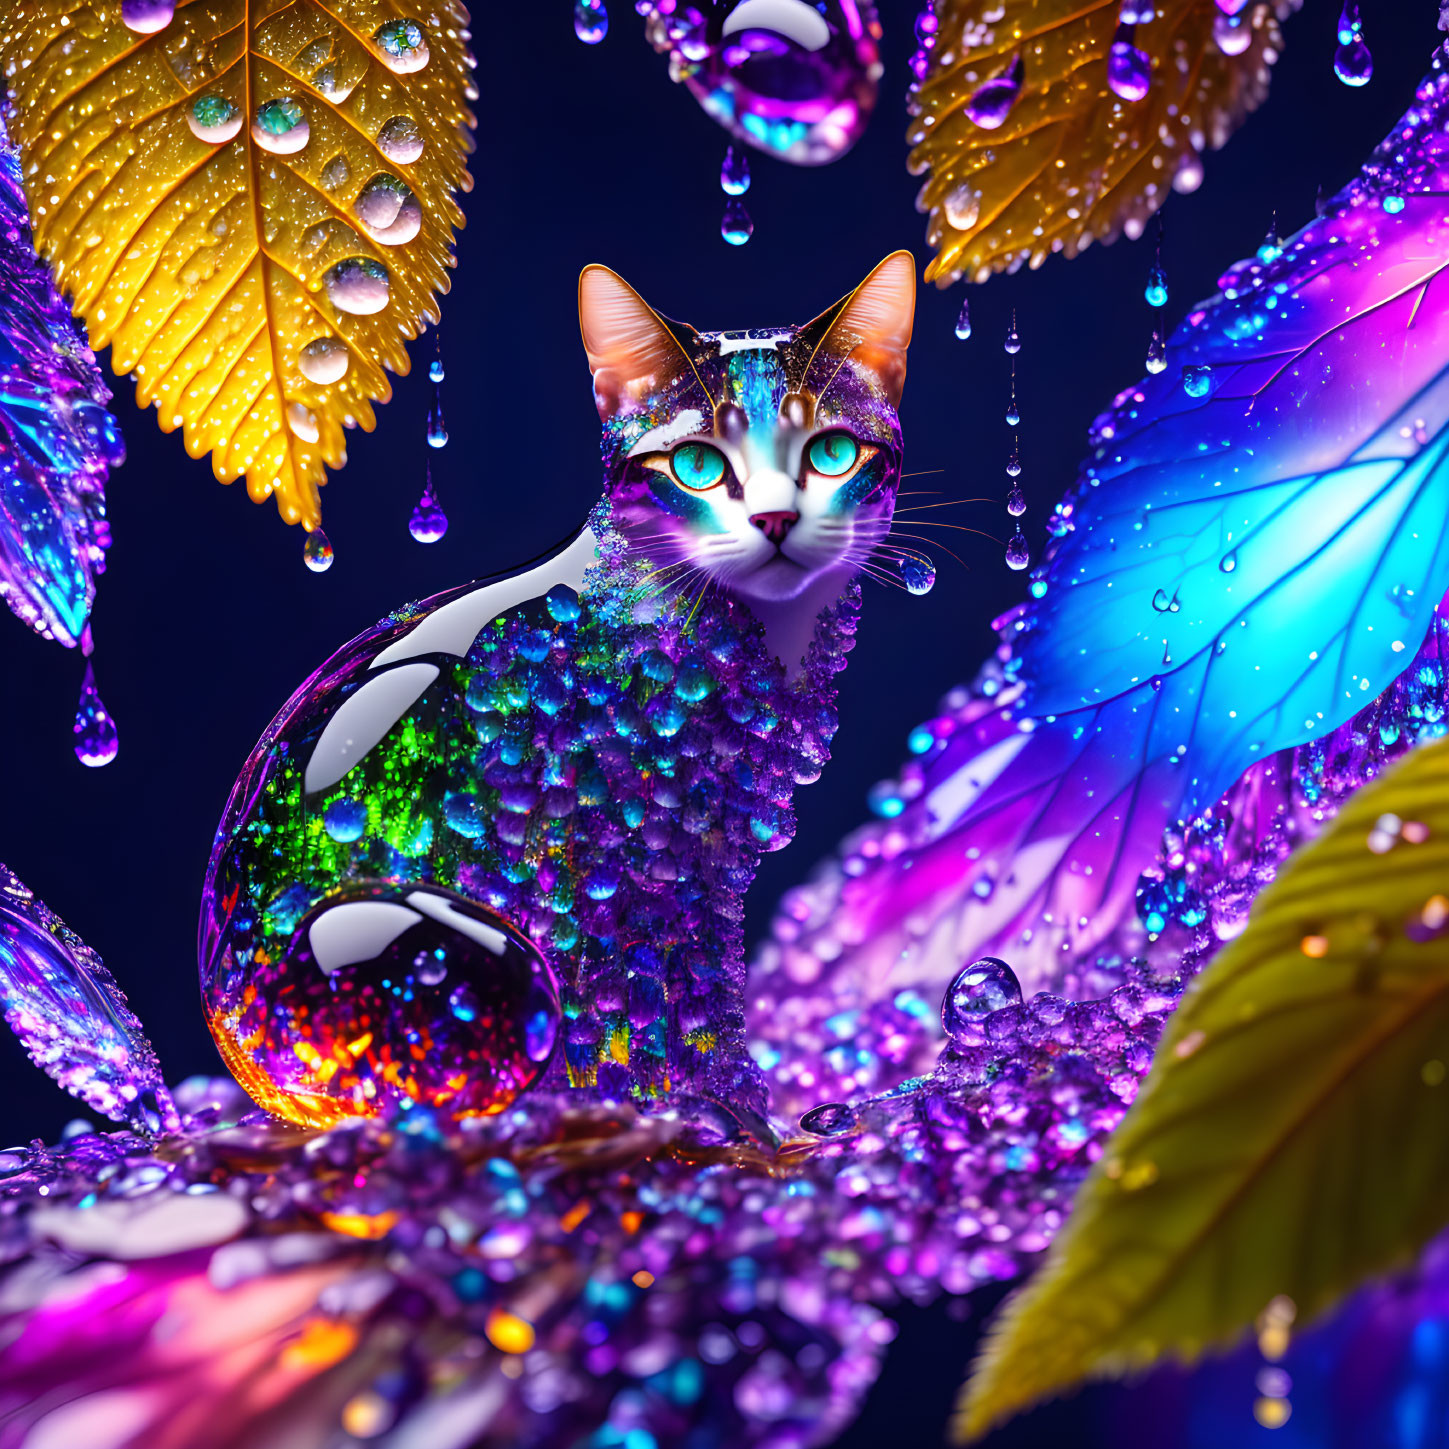 Colorful Digital Artwork: Cat with Jewel-like Texture Among Vivid Leaves